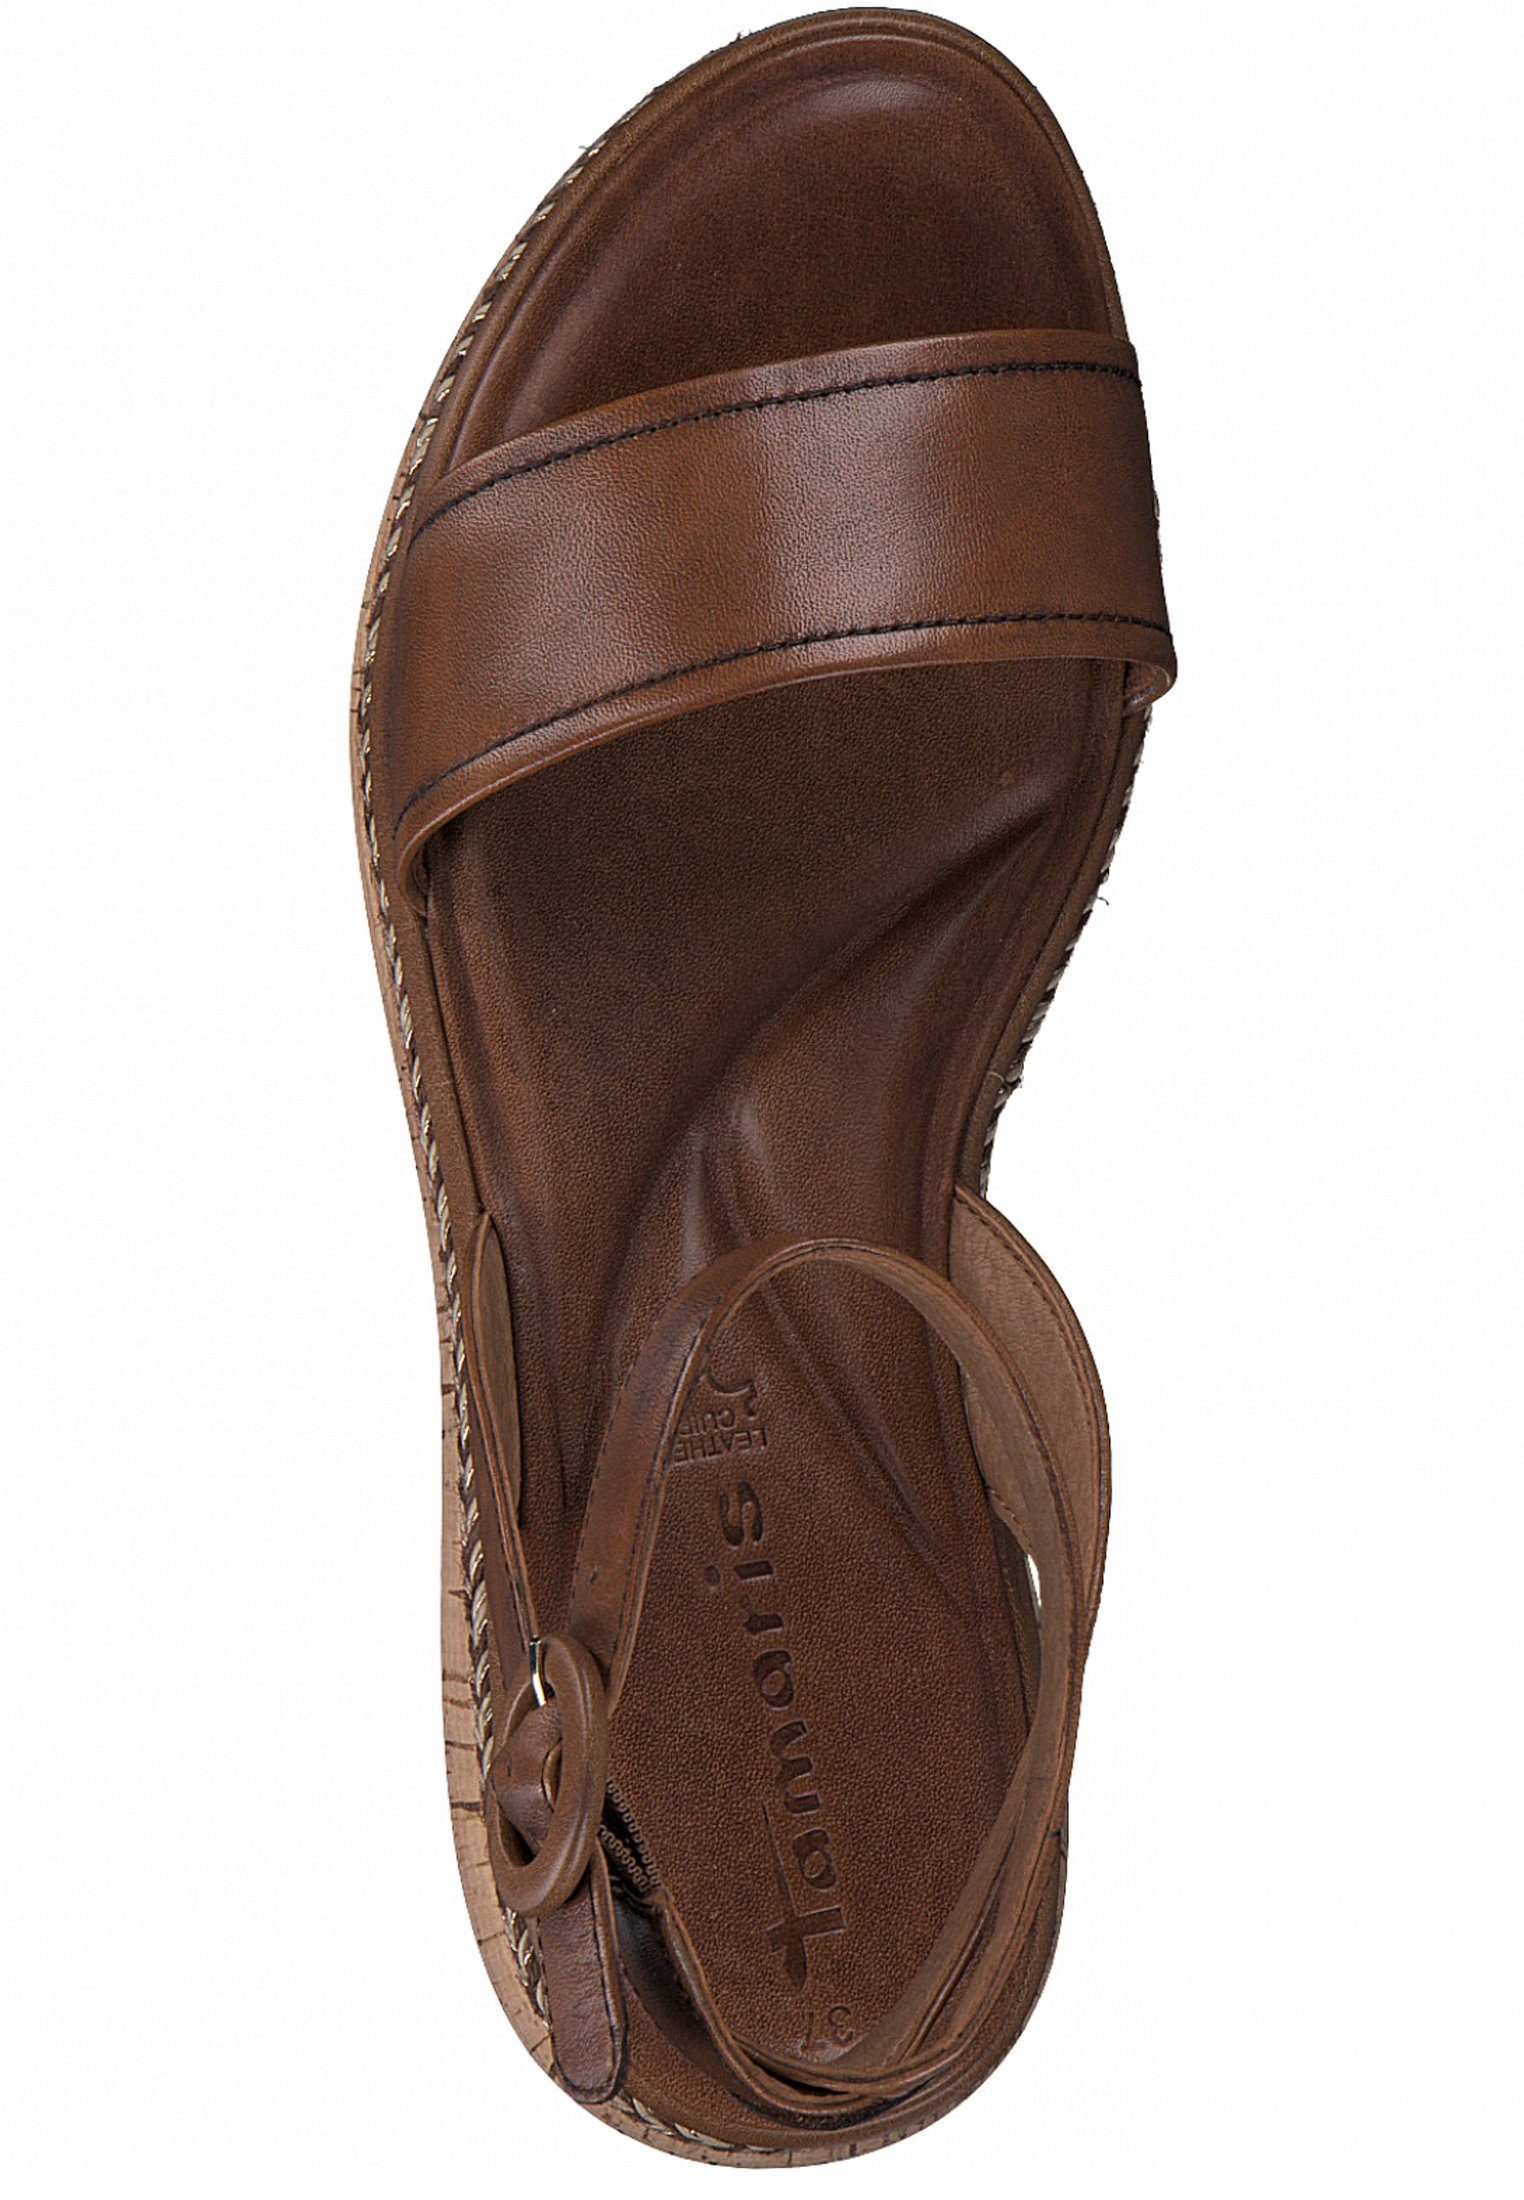 Sandale Leather Nut Braun 1-28231-28 Tamaris (21203463) 440